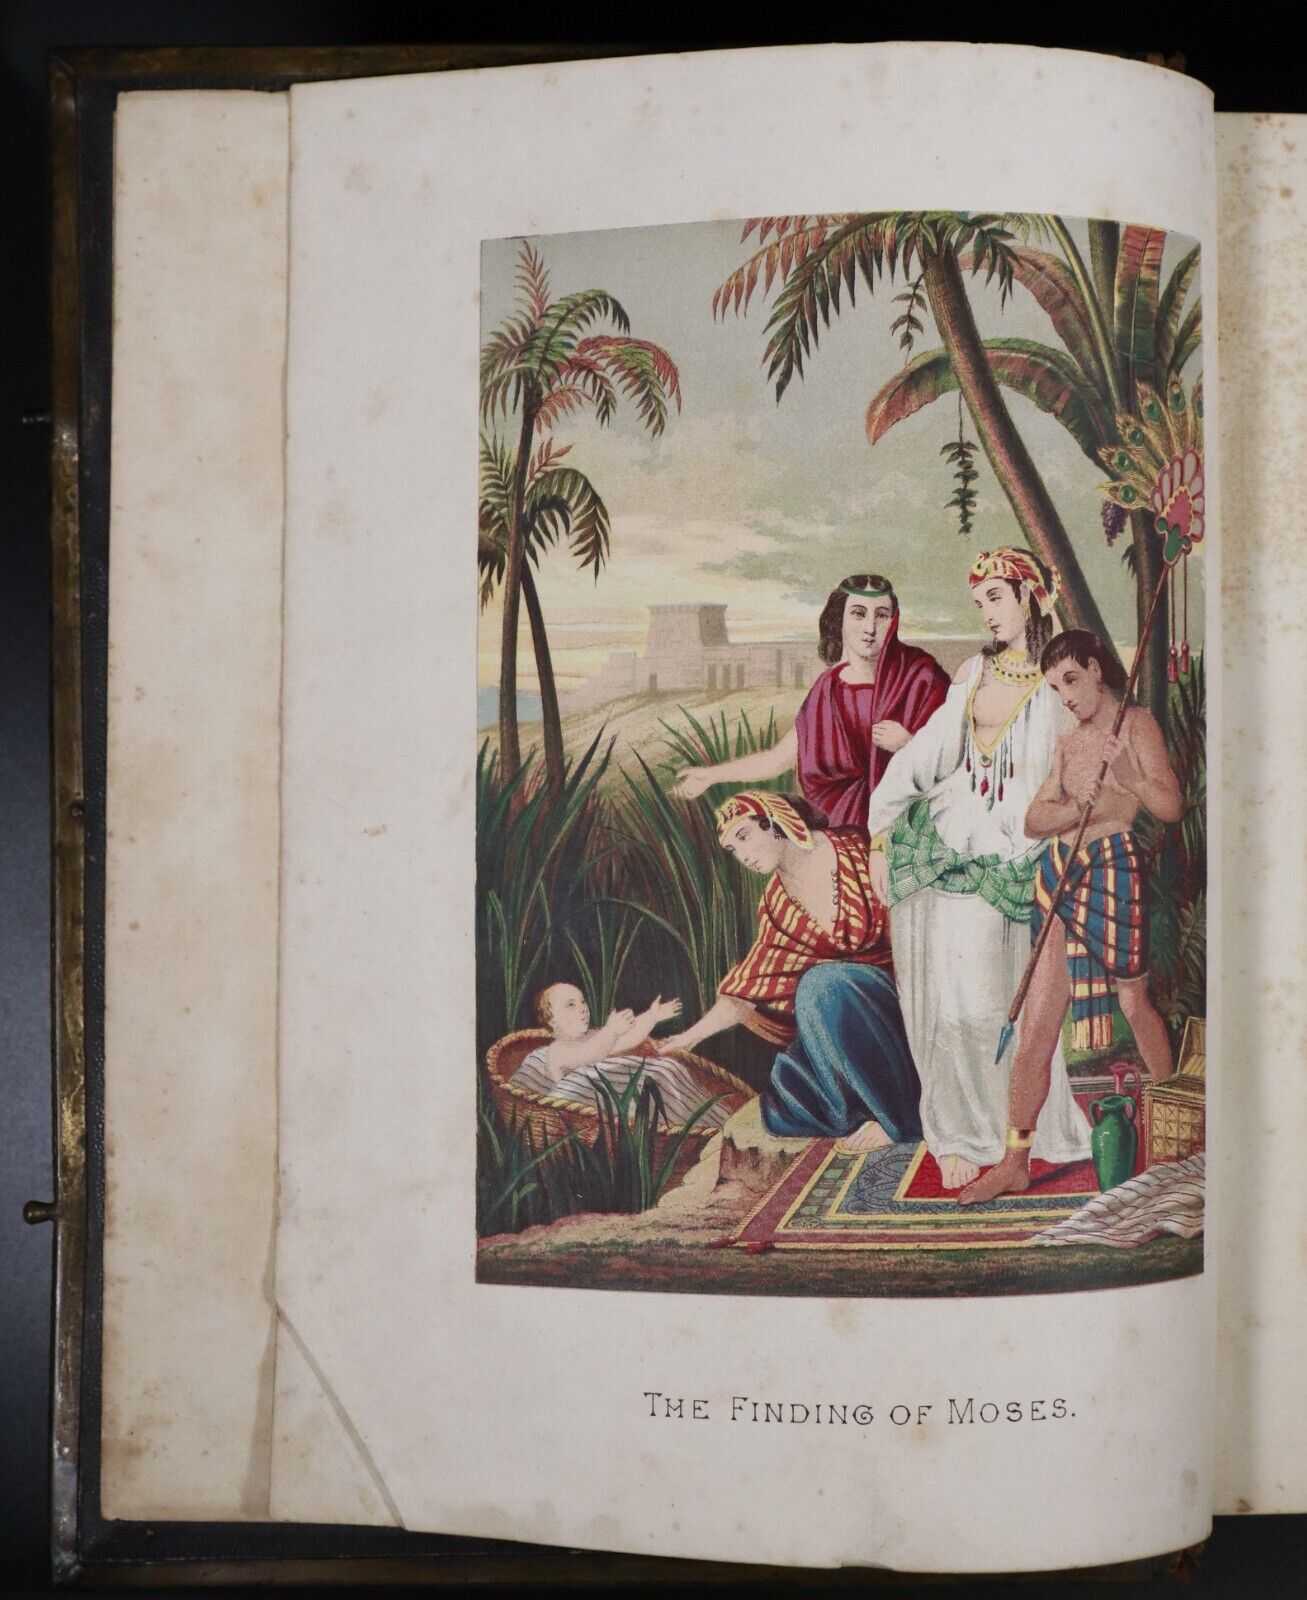 c1870 Browns Self Interpreting Sydney Family Bible Illustrated Antiquarian Bible